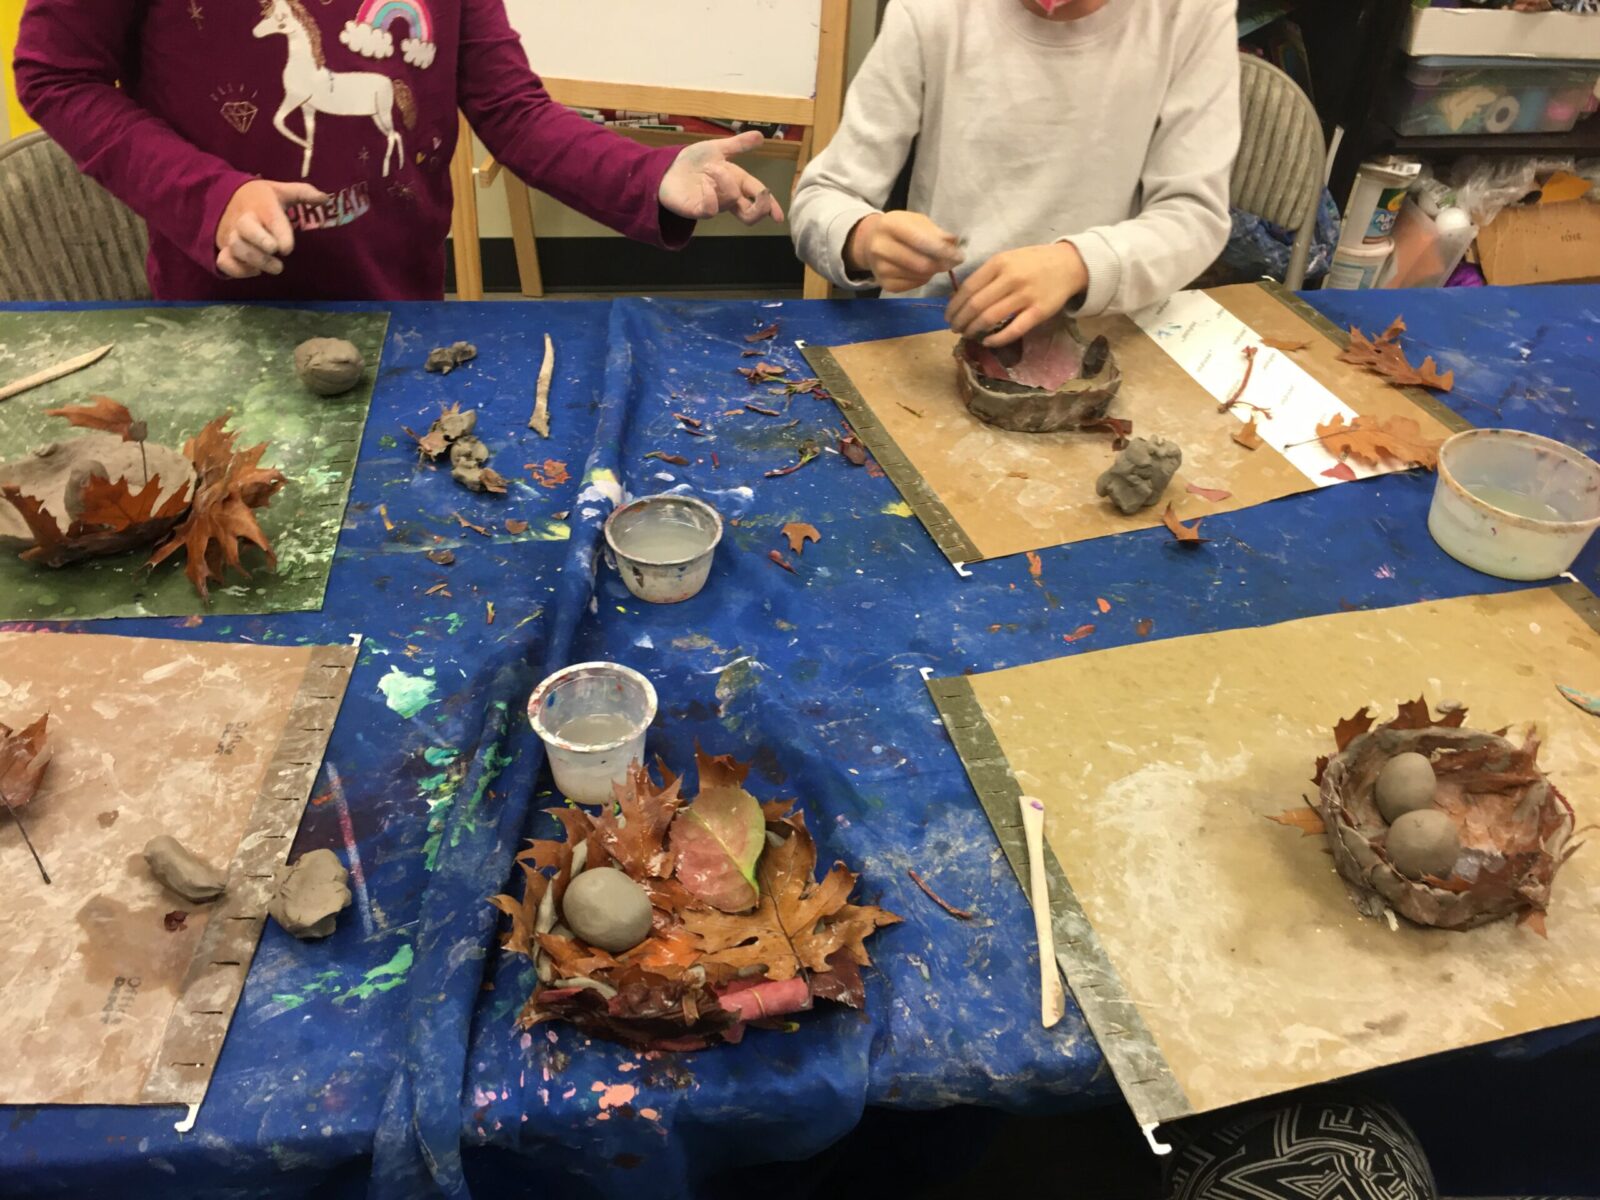 Kids making crafts using clay